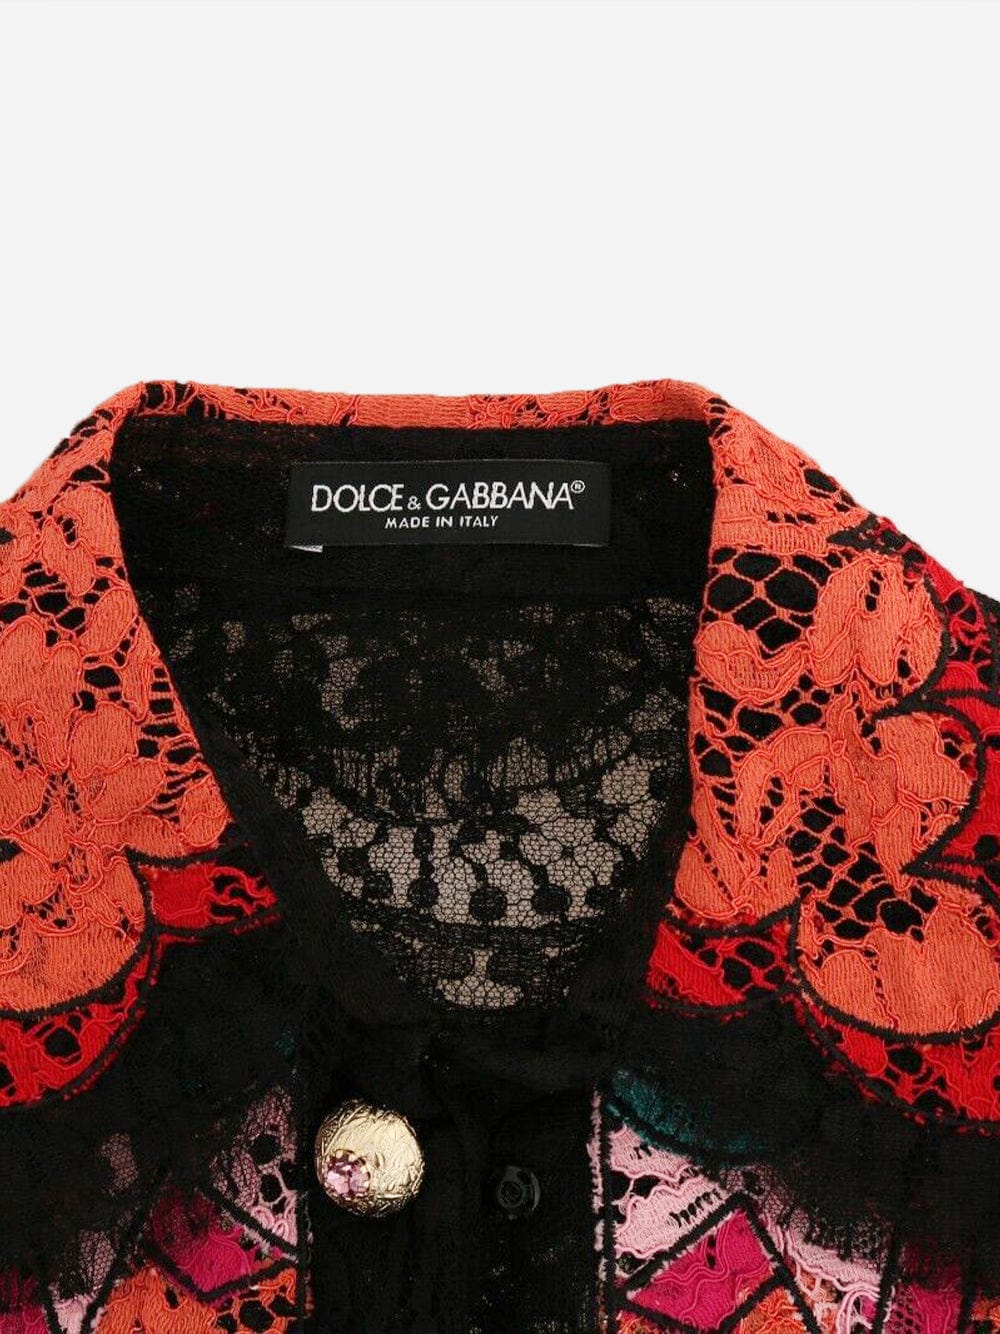 Dolce & Gabbana Lace Embellished Lace Shirt